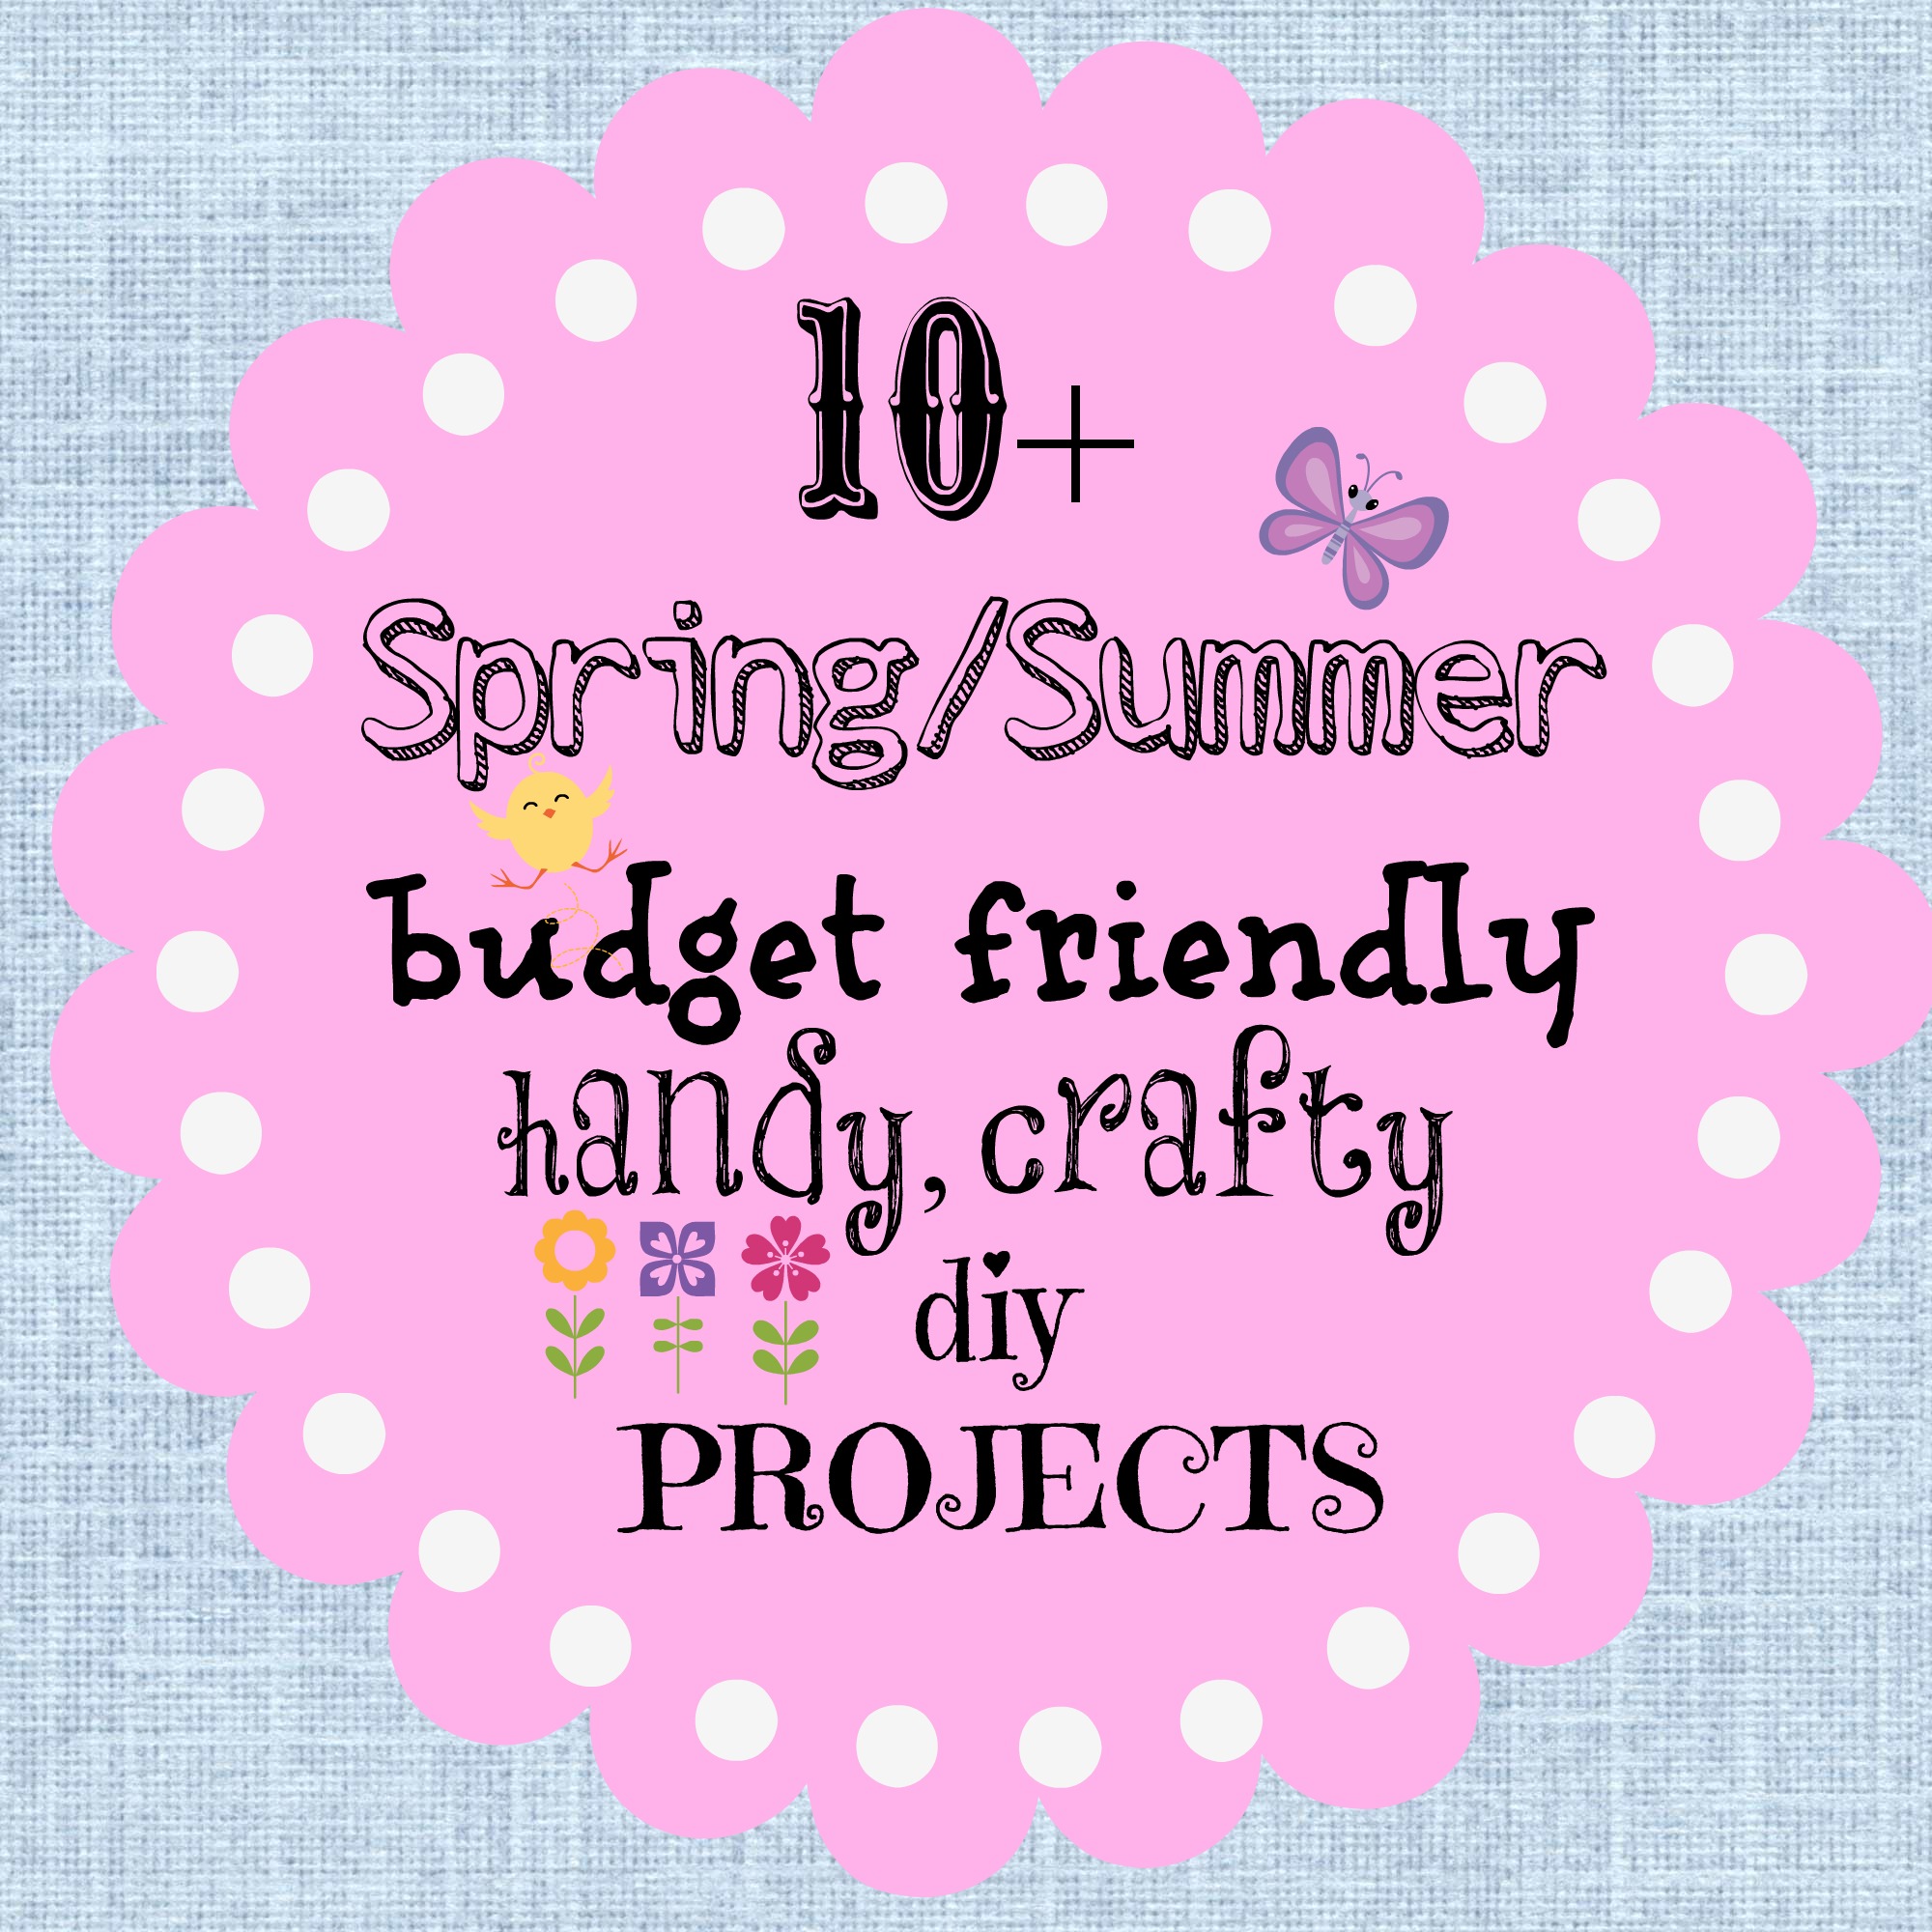 Spring-summer budget friendly crafts